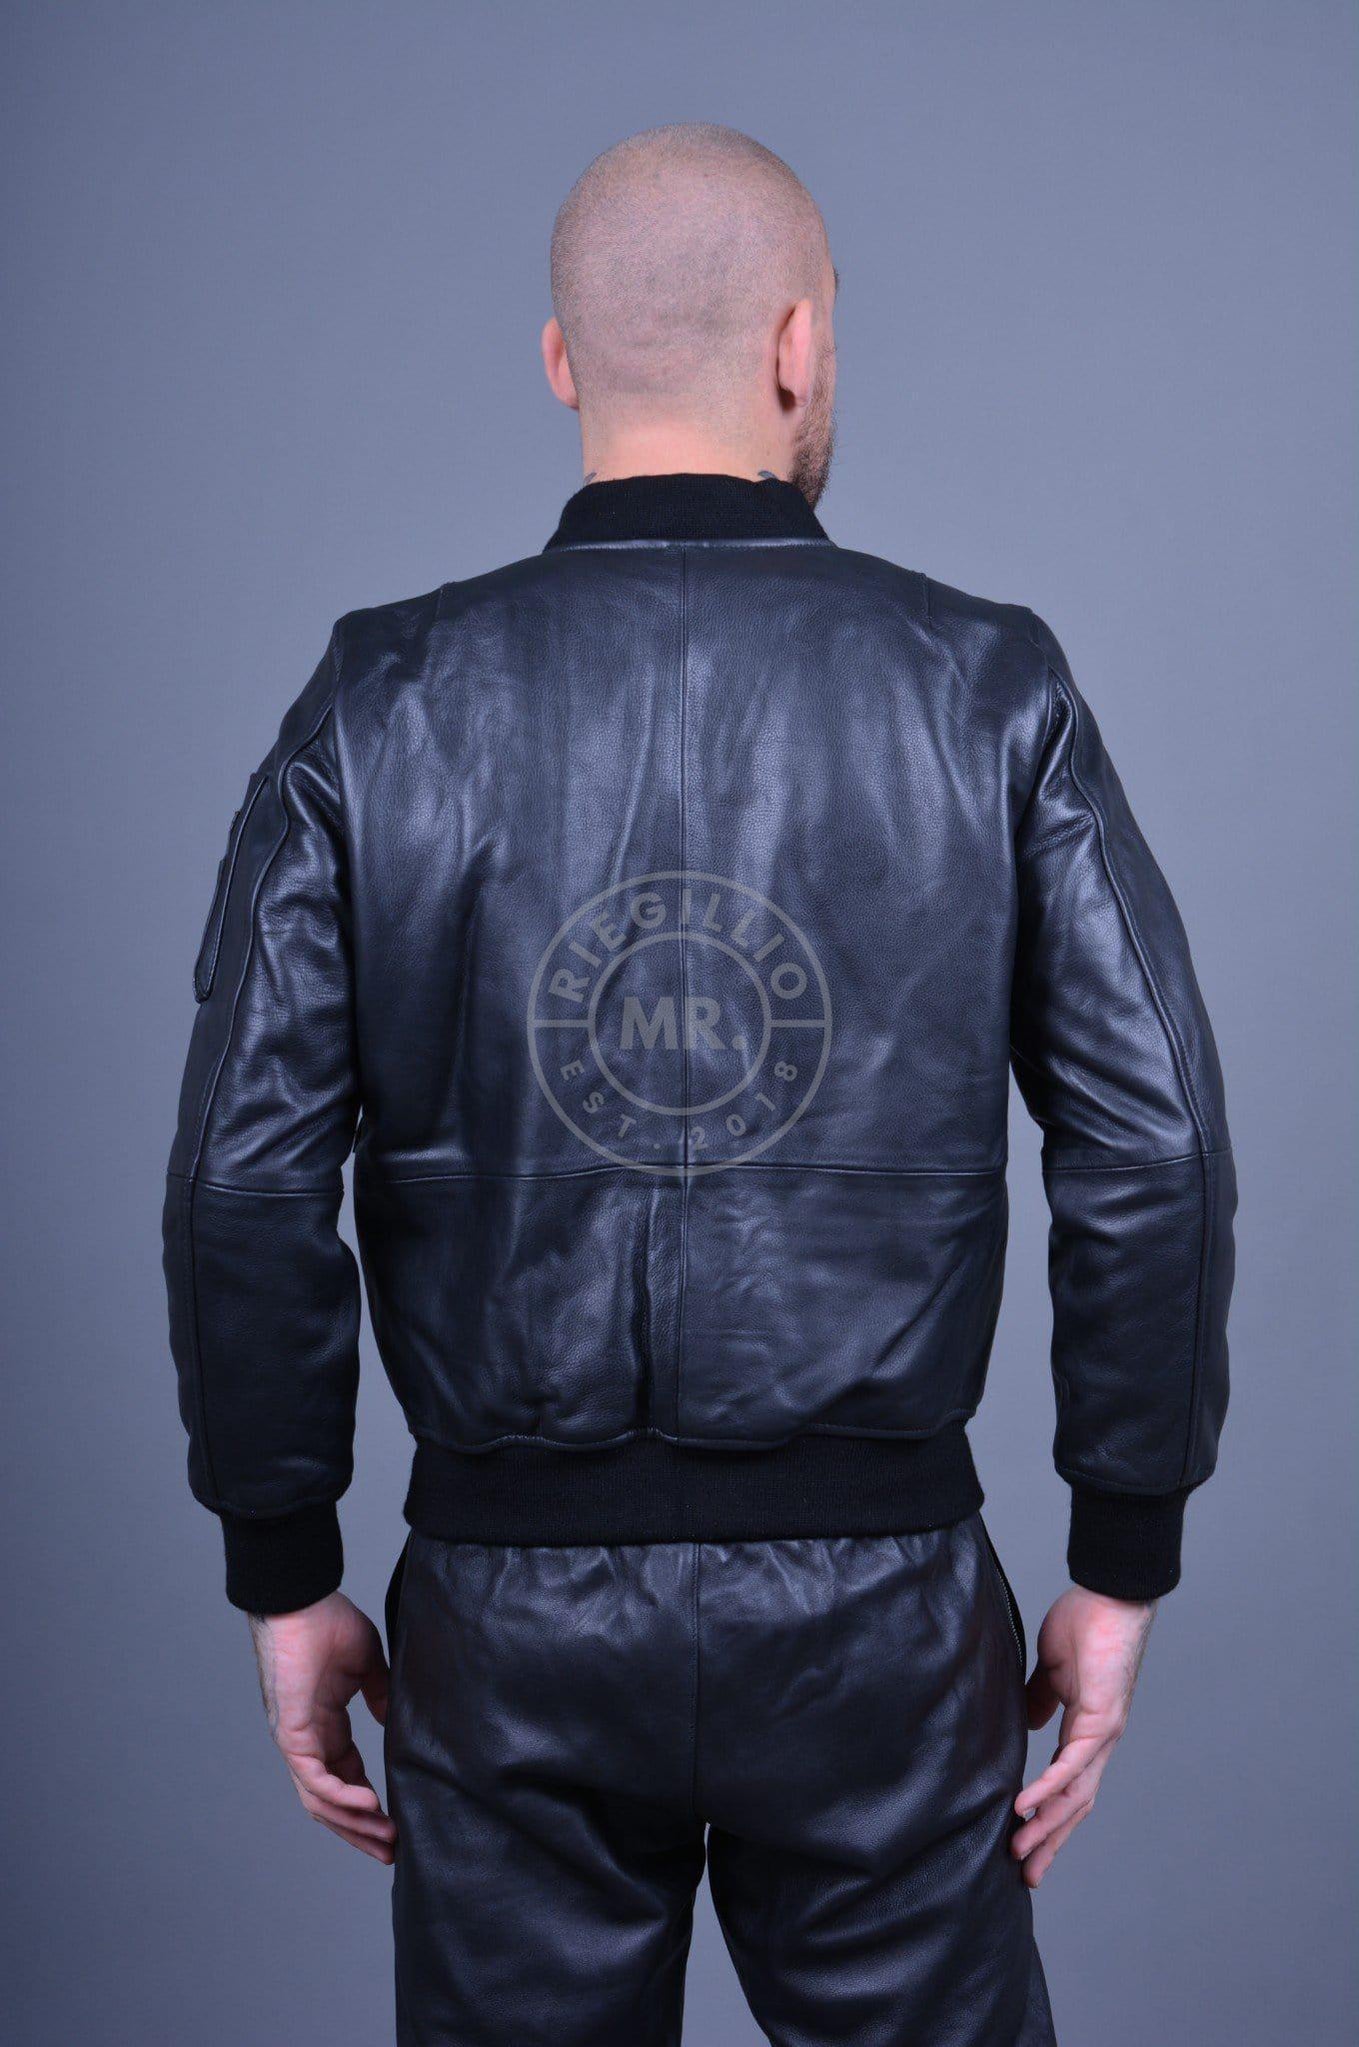 Black Leather Bomber Jacket at MR. Riegillio